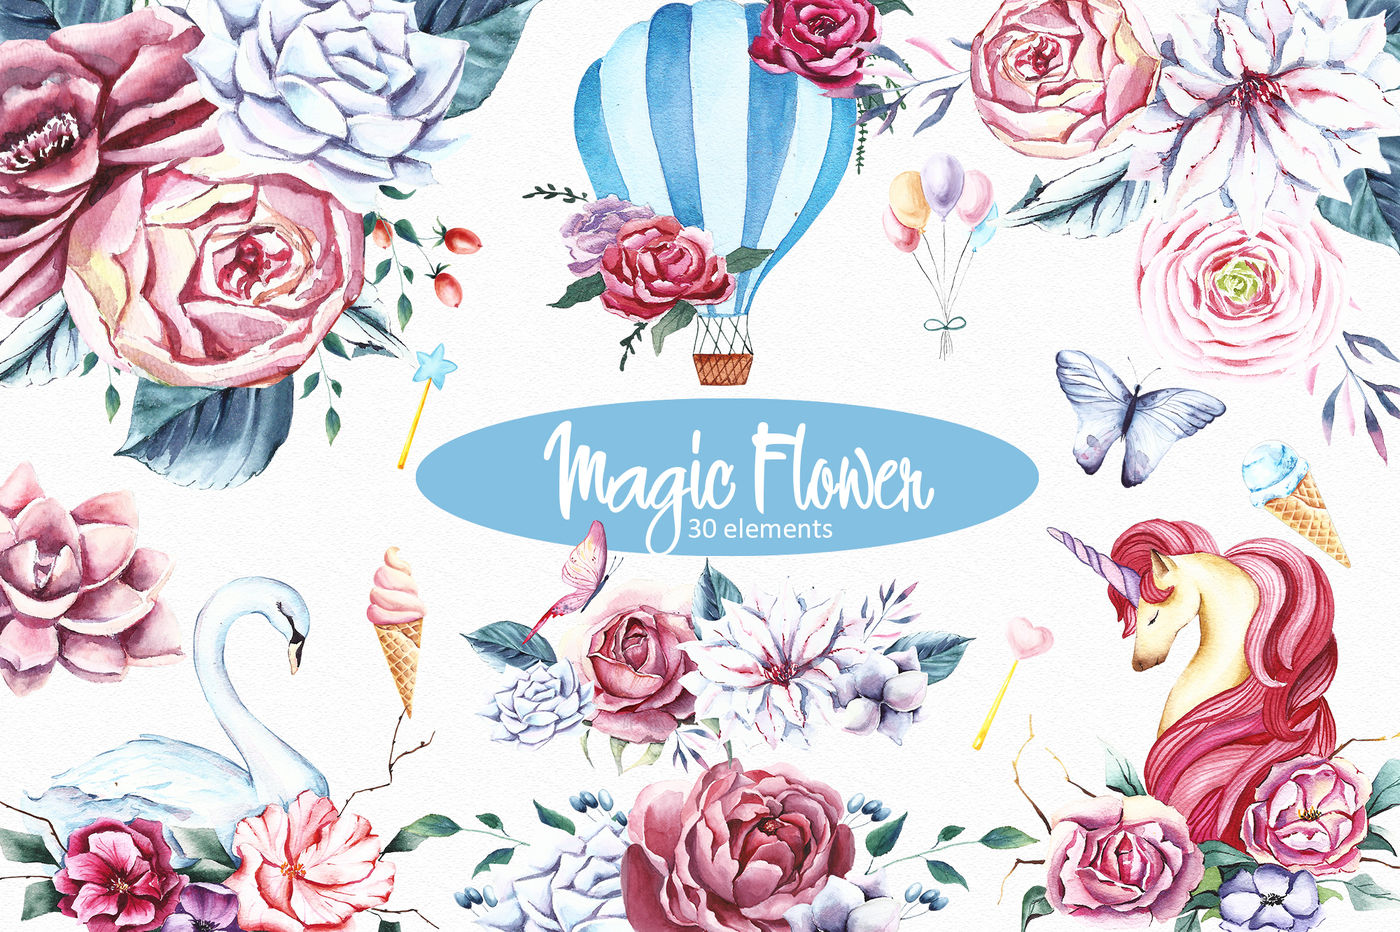 Magic flower clipart By SpringArtShop